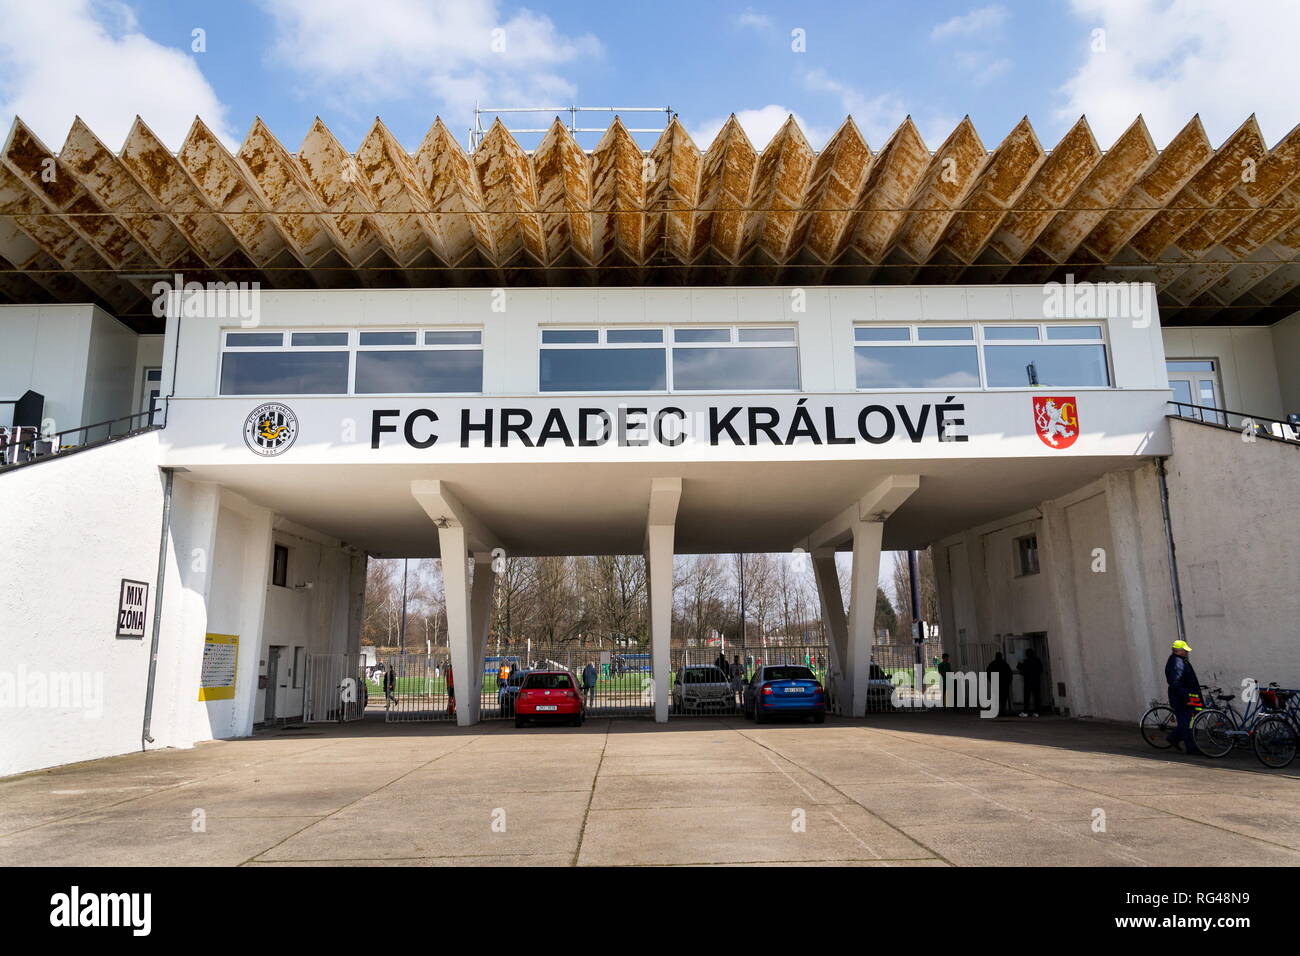 HRADEC KRALOVE, CZECH REPUBLIC - MARCH 25 2018: FC Hradec Kralove football club sport stadium on March 25, 2018 in Hradec Kralove, Czech republic. Stock Photo